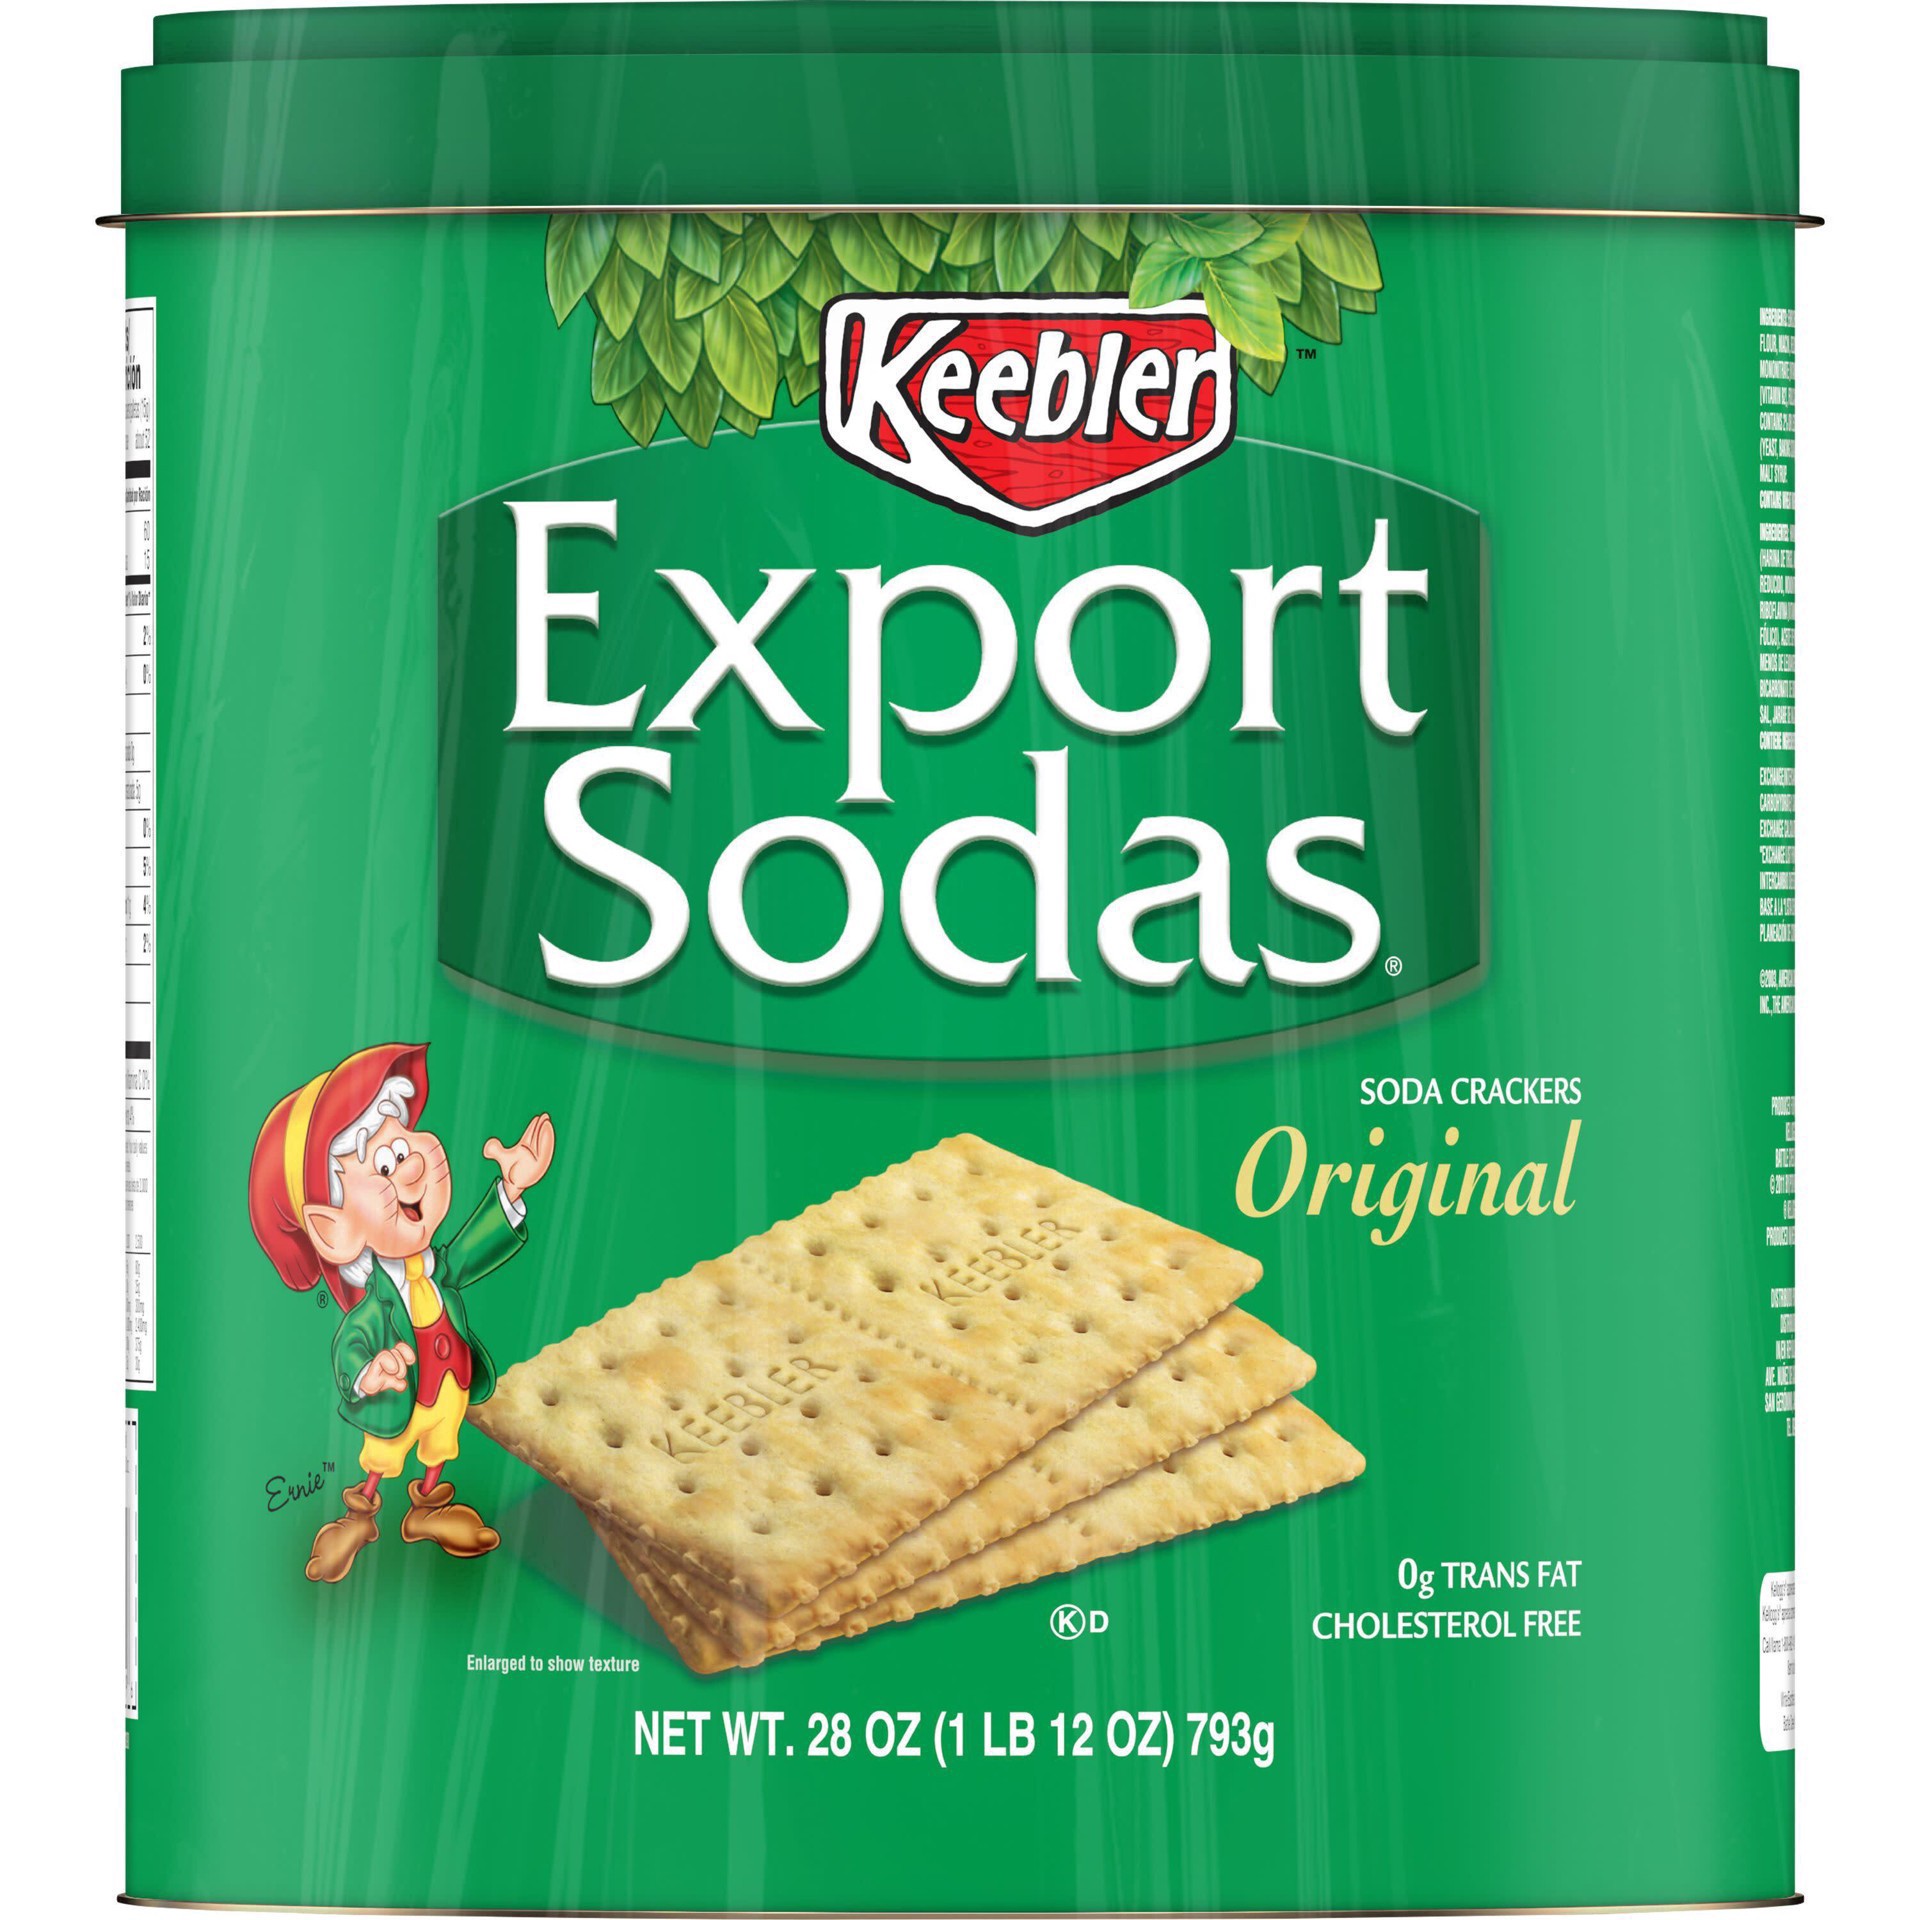 slide 46 of 63, Keebler Export Sodas Soda Crackers, Original, 28 oz, 28 oz